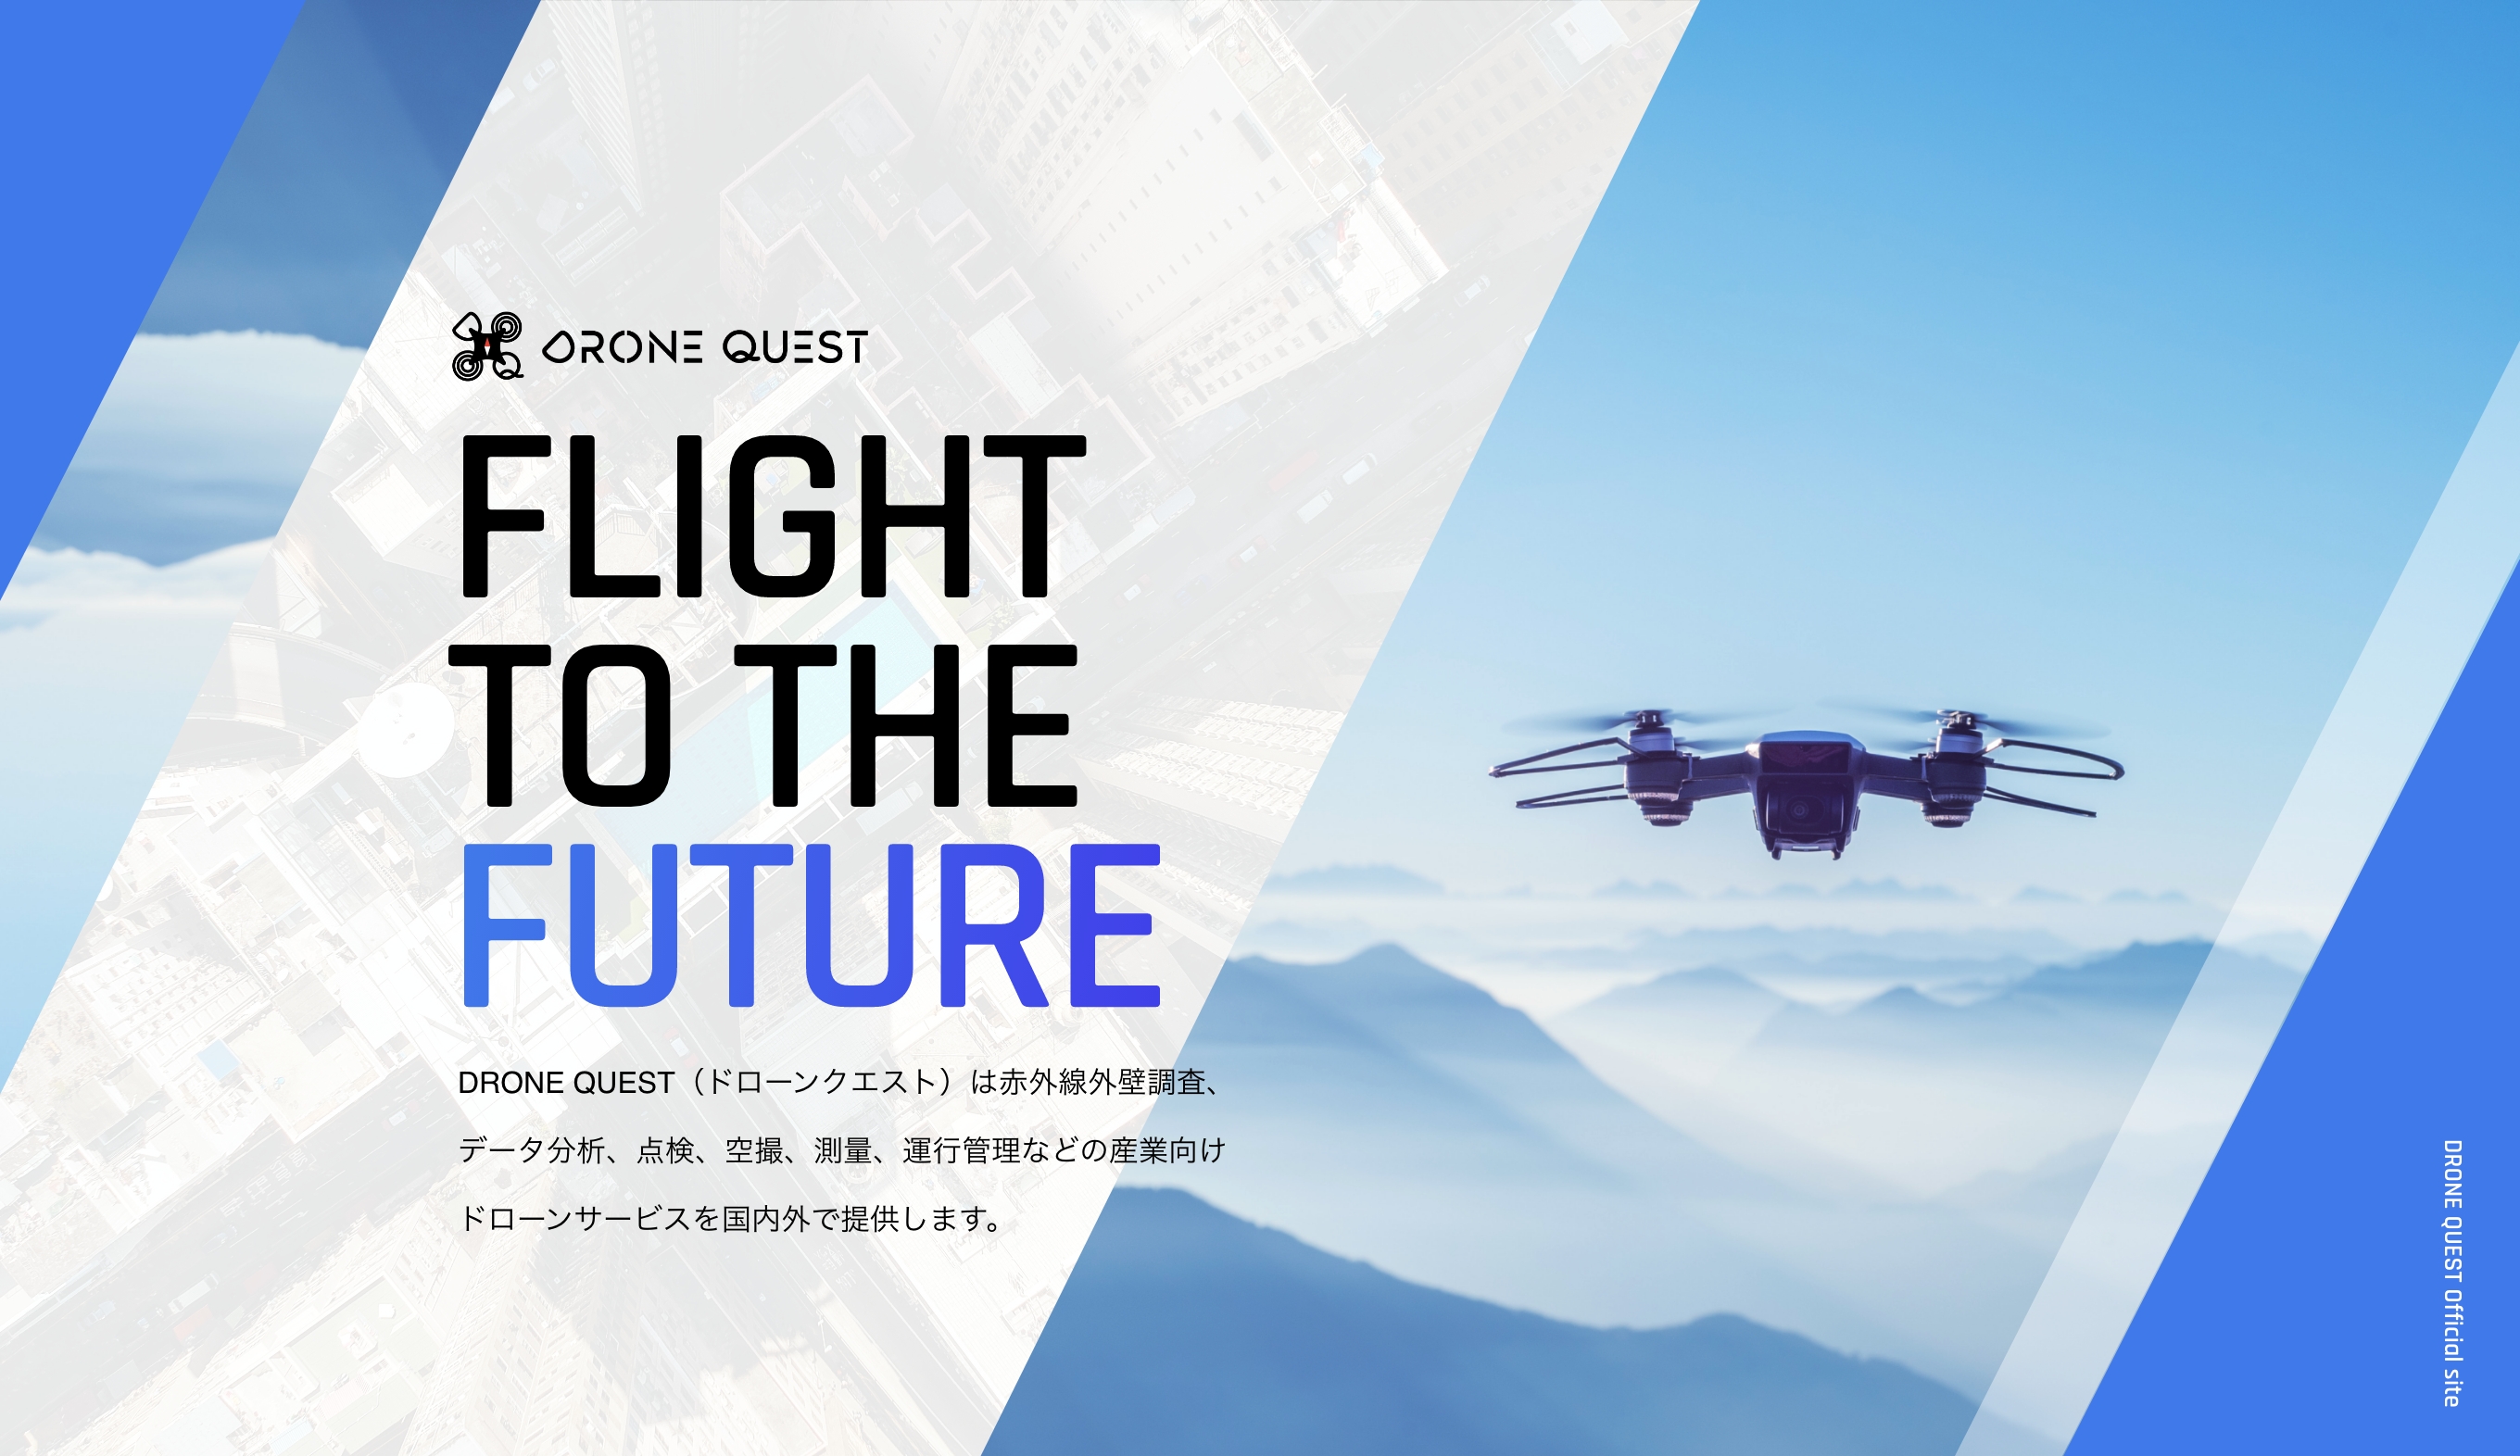 DRONE QUEST Co., Ltd.FLIGHT TO THE FUTURE DRONE QUEST（ドローンクエスト）は赤外線外壁調査、データ分析、点検、空撮、測量、運行管理などの産業向けドローンサービスを国内外で提供します。